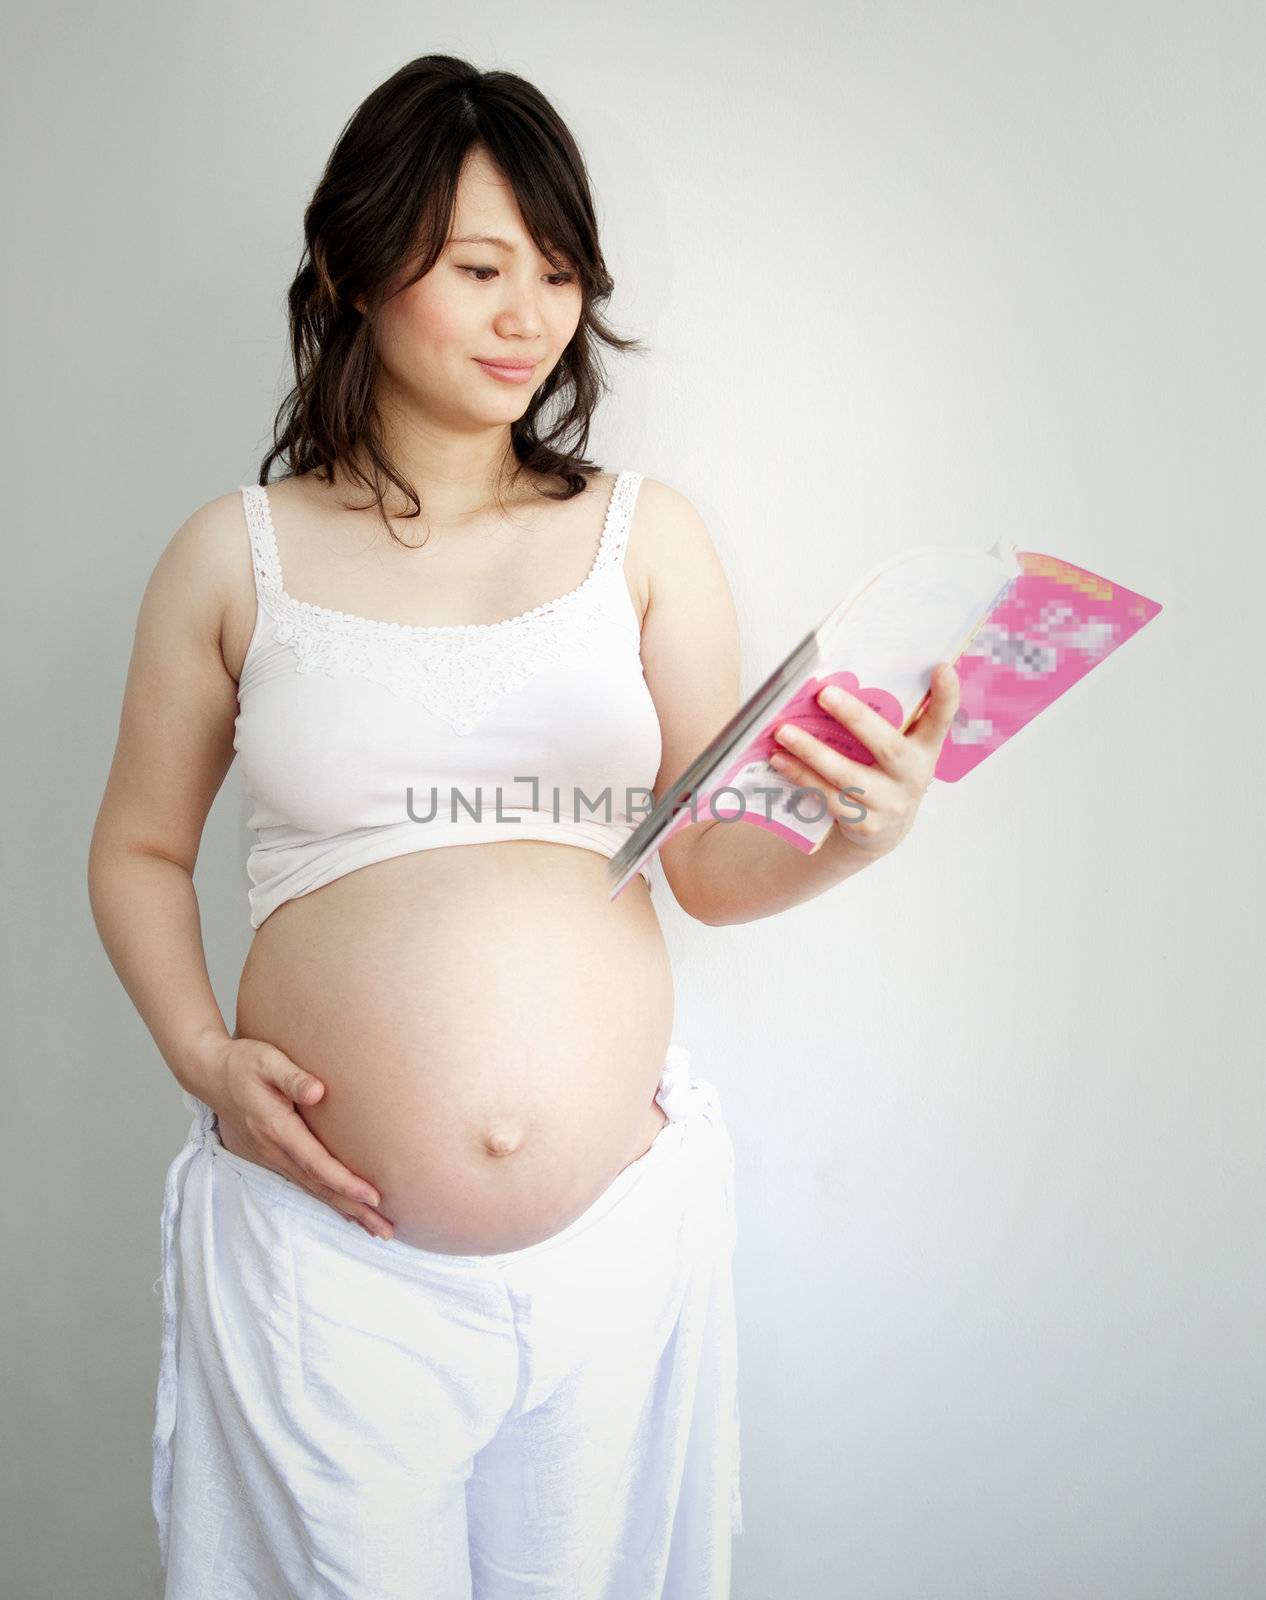 8 months pregnant Asian women reading book.